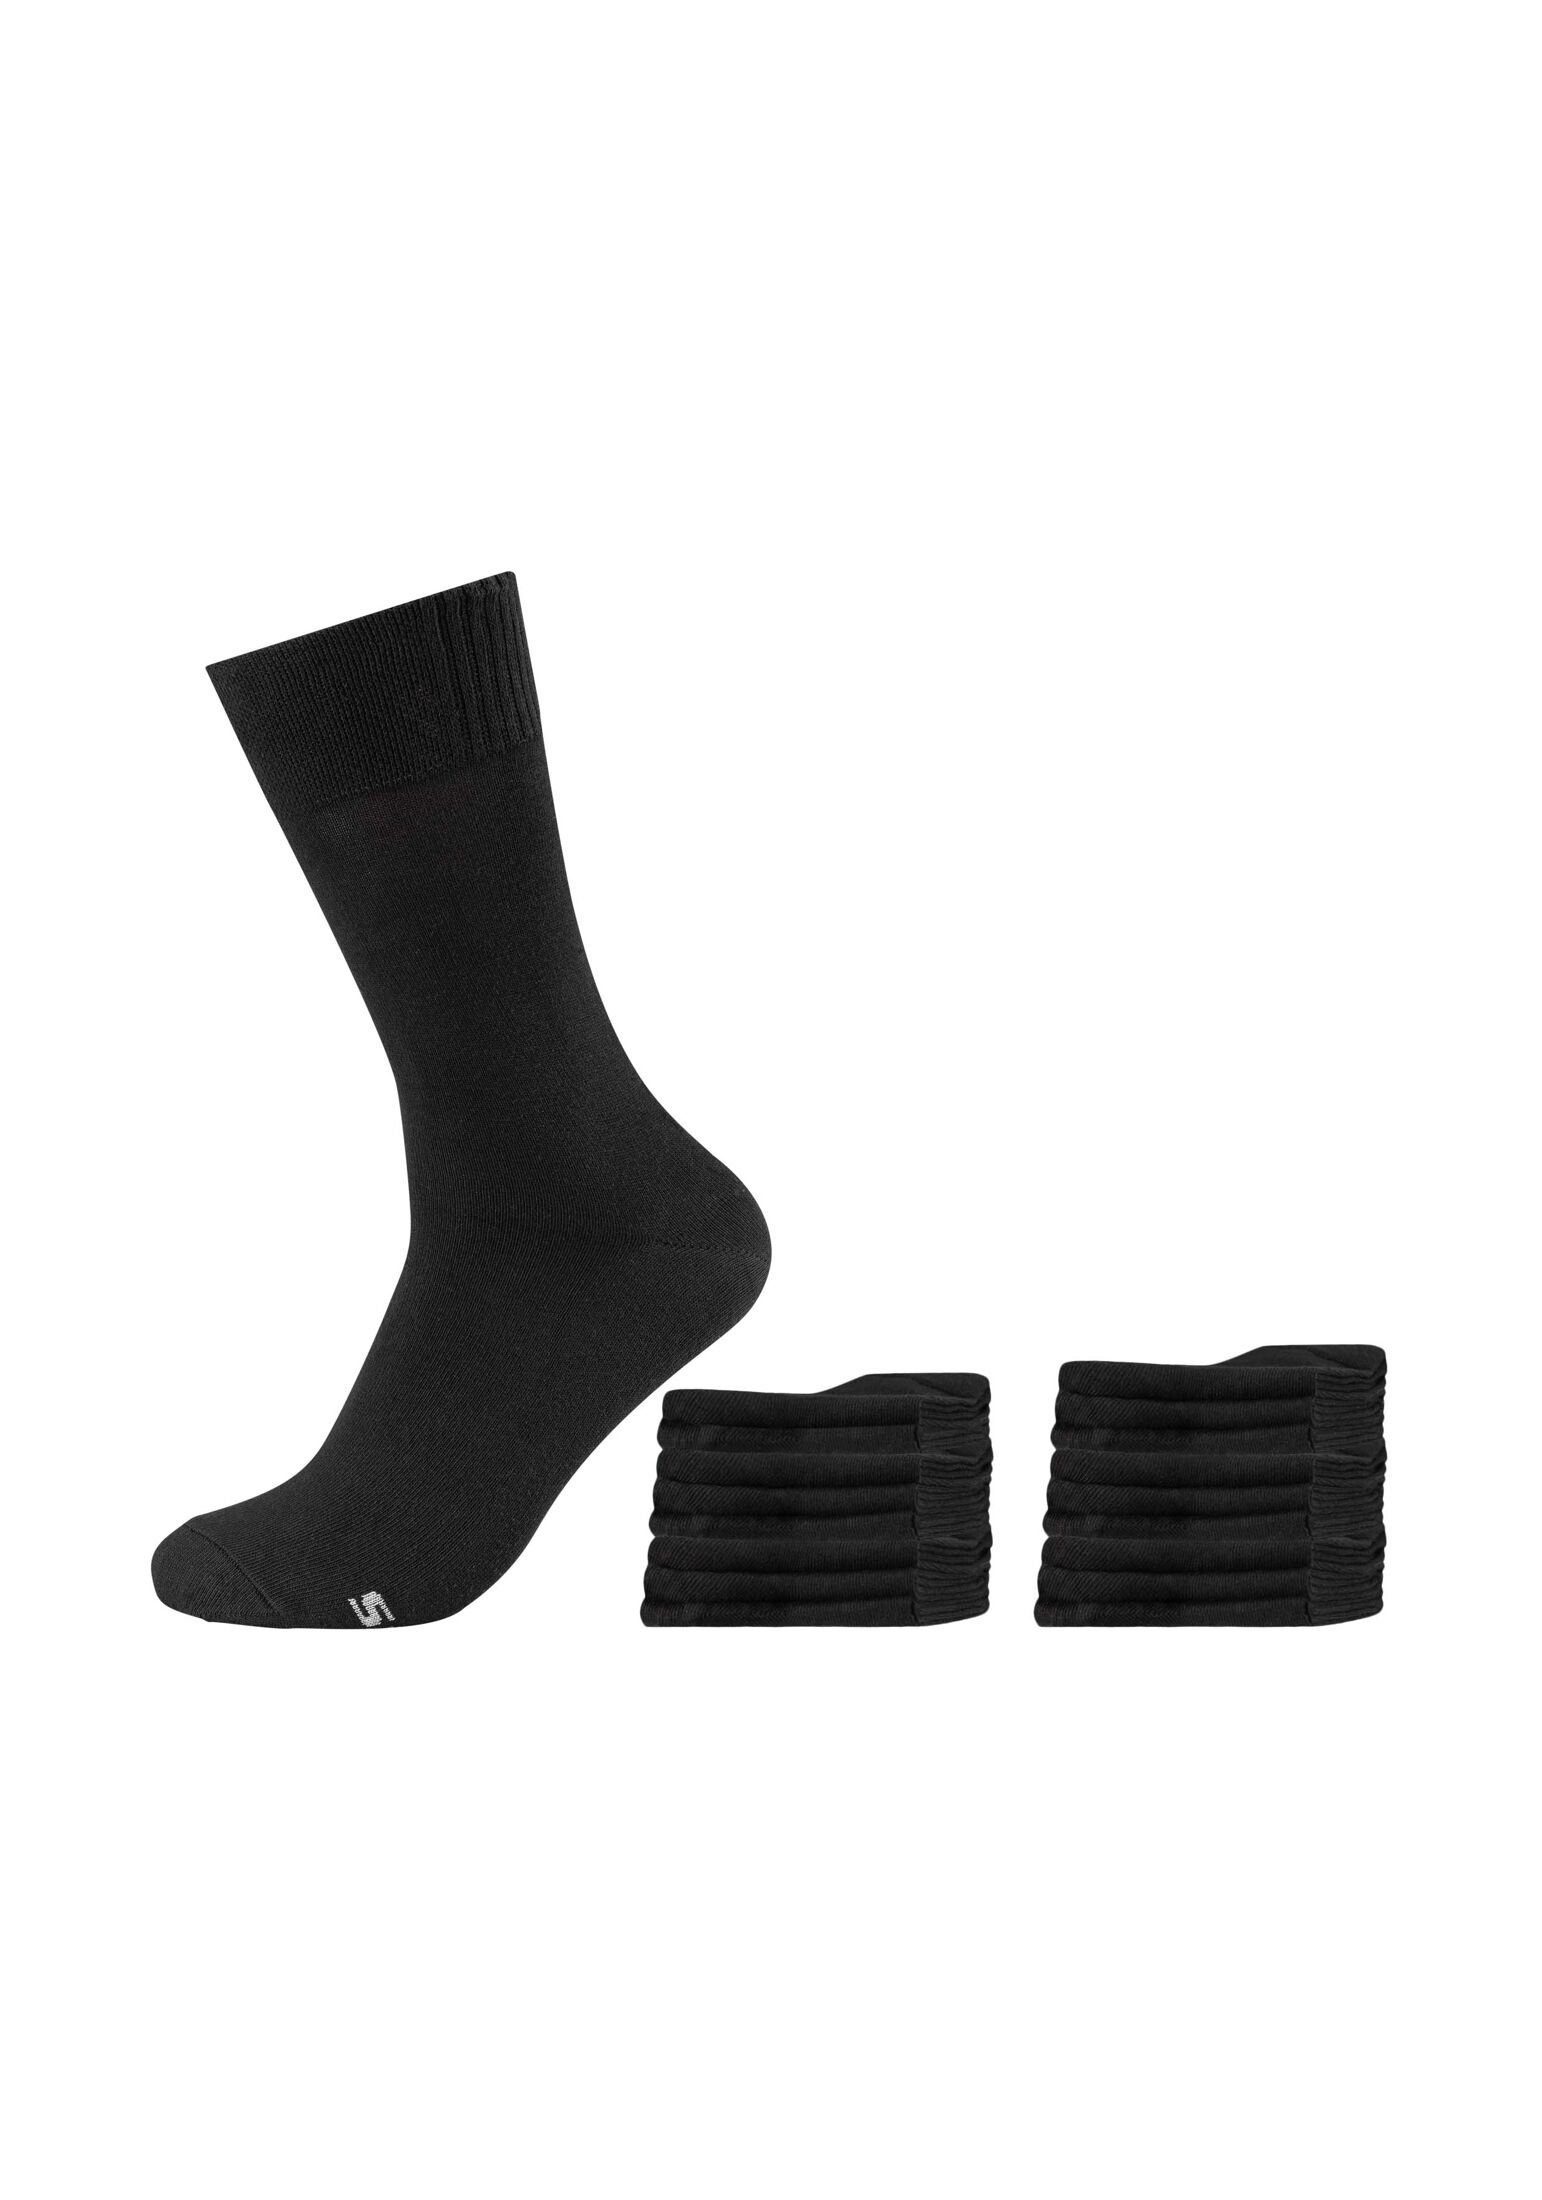 Skechers Socken Socken 18er Pack, Aus angenehmem Materialmix mit hohem  Baumwollanteil